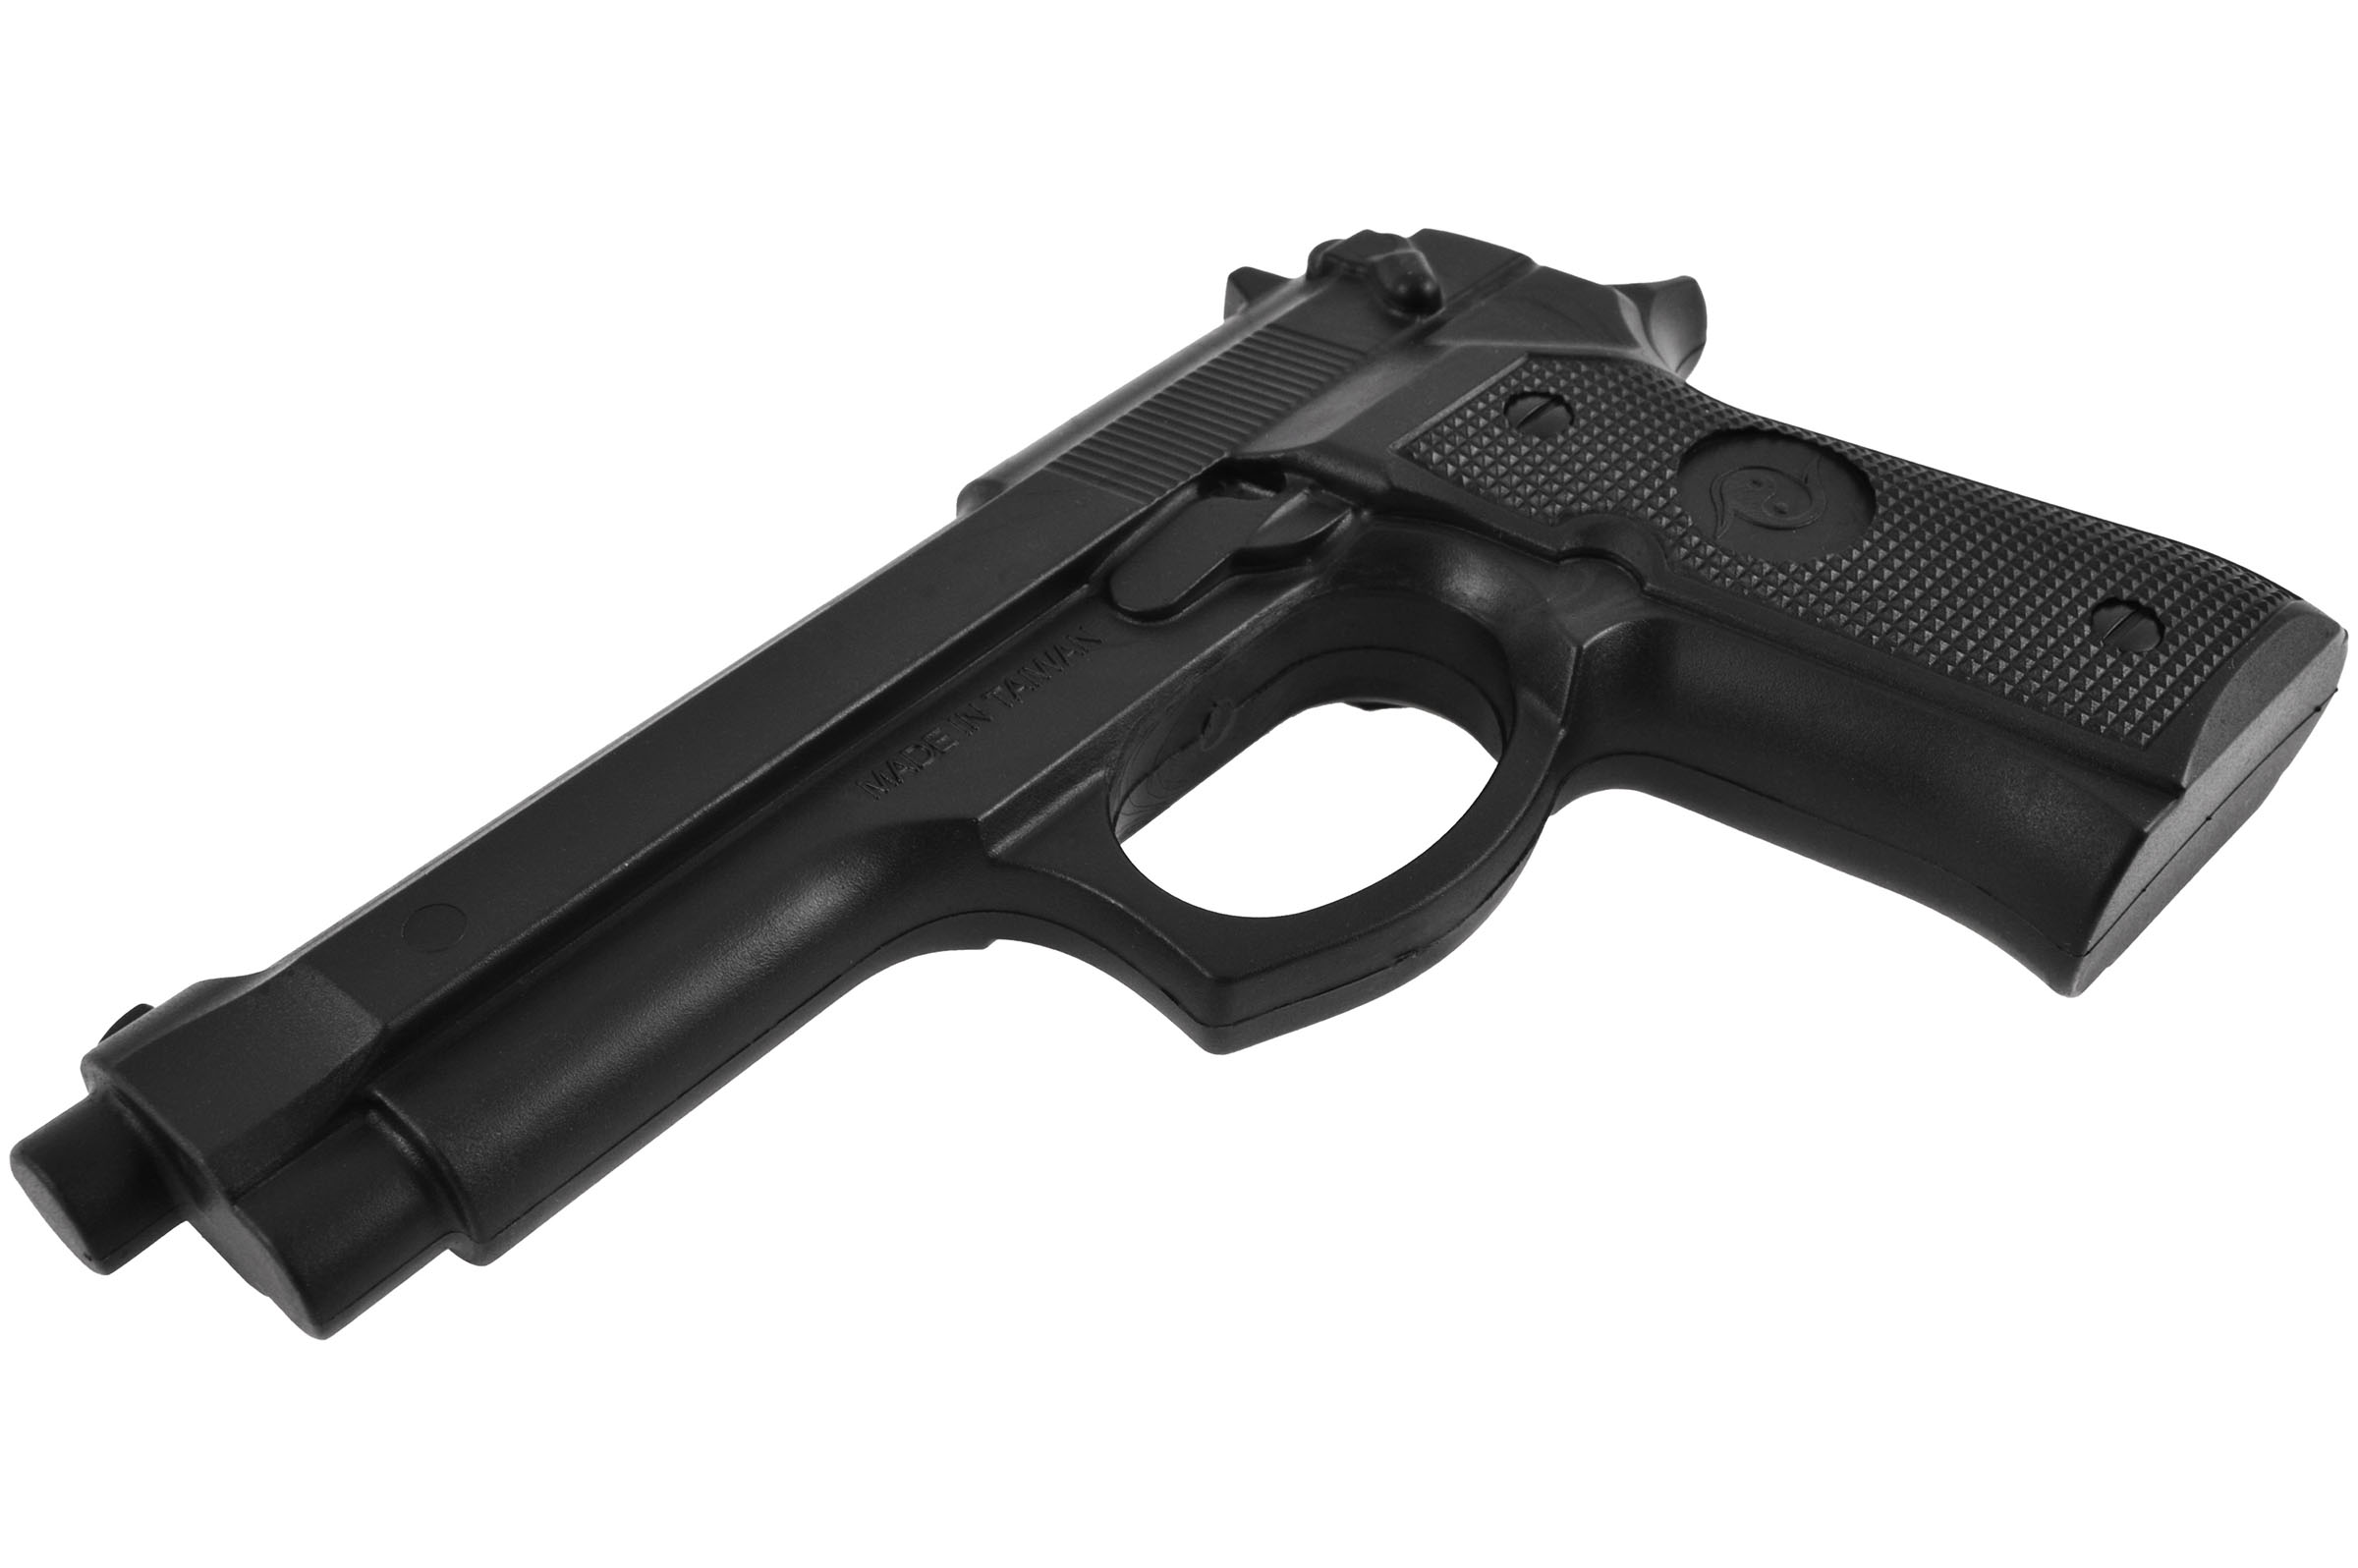 Pistolet Caoutchouc, Beretta - ARE416, Metal Boxe 